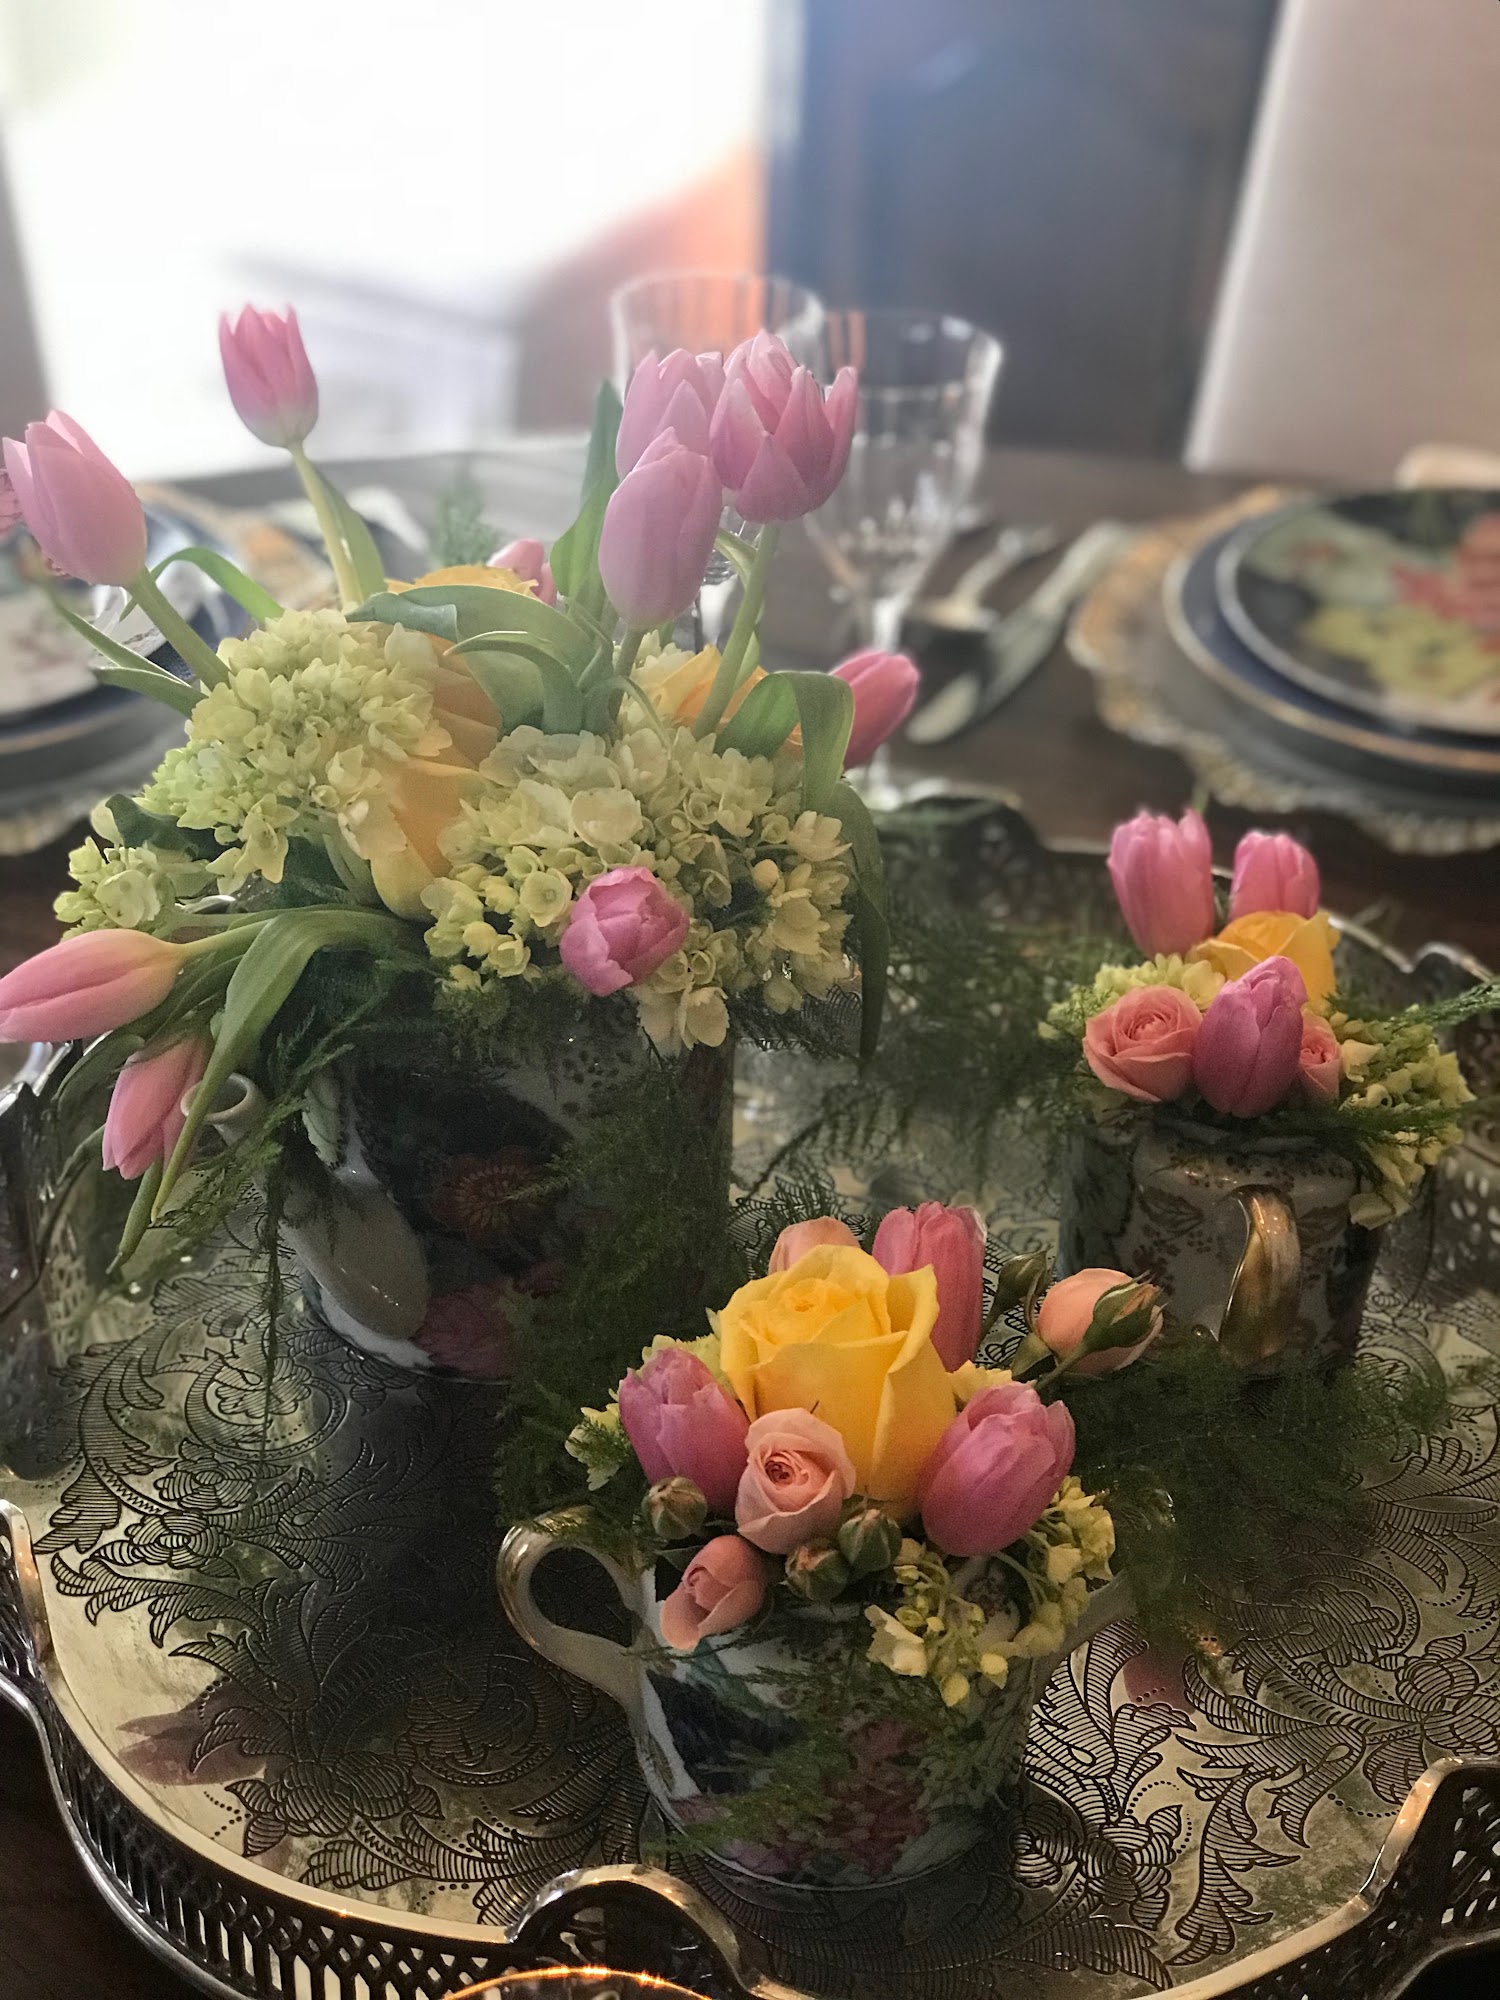 Avriett House - Flowers, Gifts, Bridal & Baby Registry 35 Peagler St, Homerville Georgia 31634